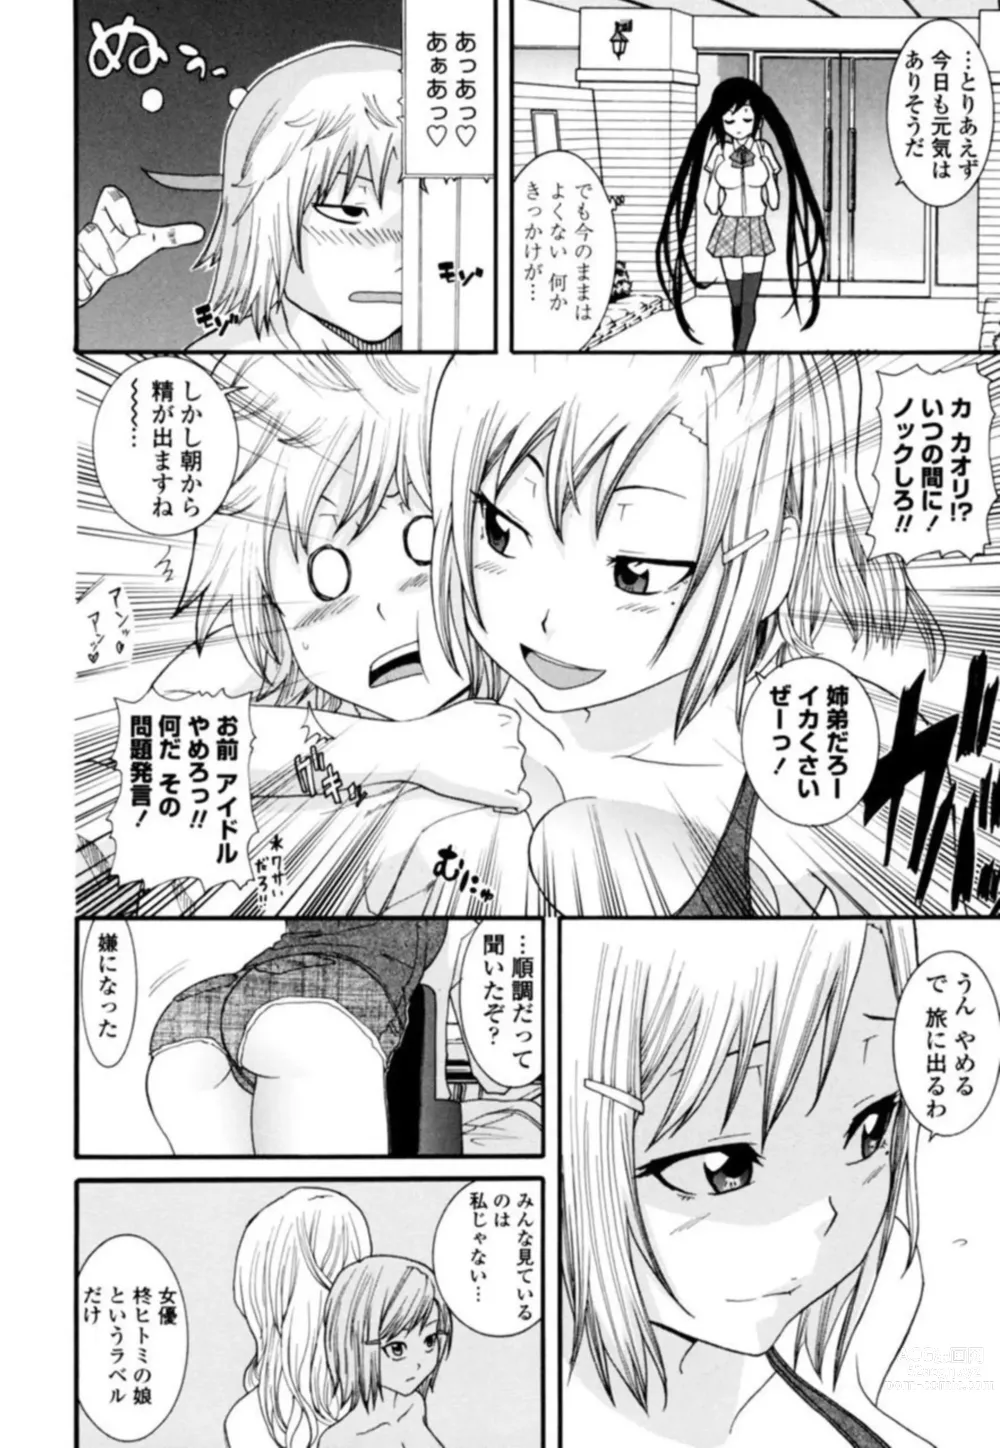 Page 6 of manga Ane ni Nari Kiri Shiru Joyū!?~ Mubōbi bijo o Yari Taoshi ~ 1